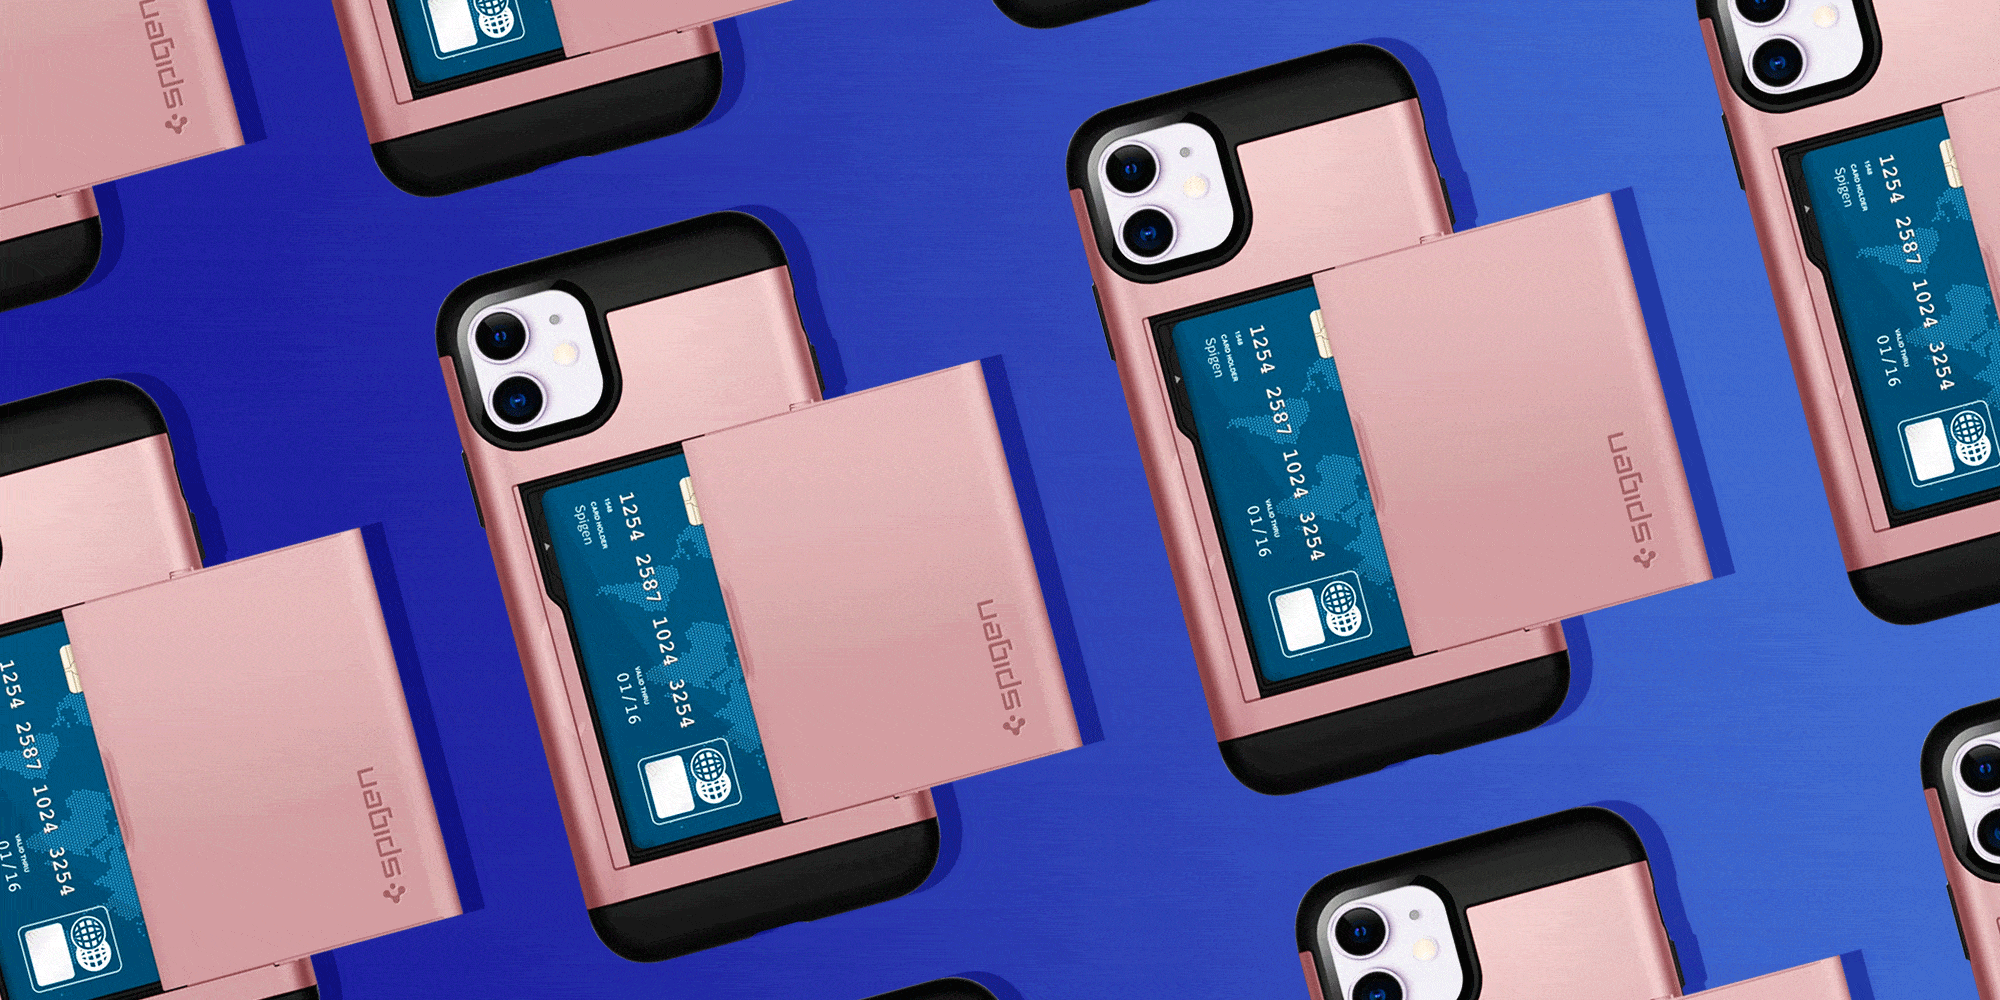 iphone 6 credit card holder